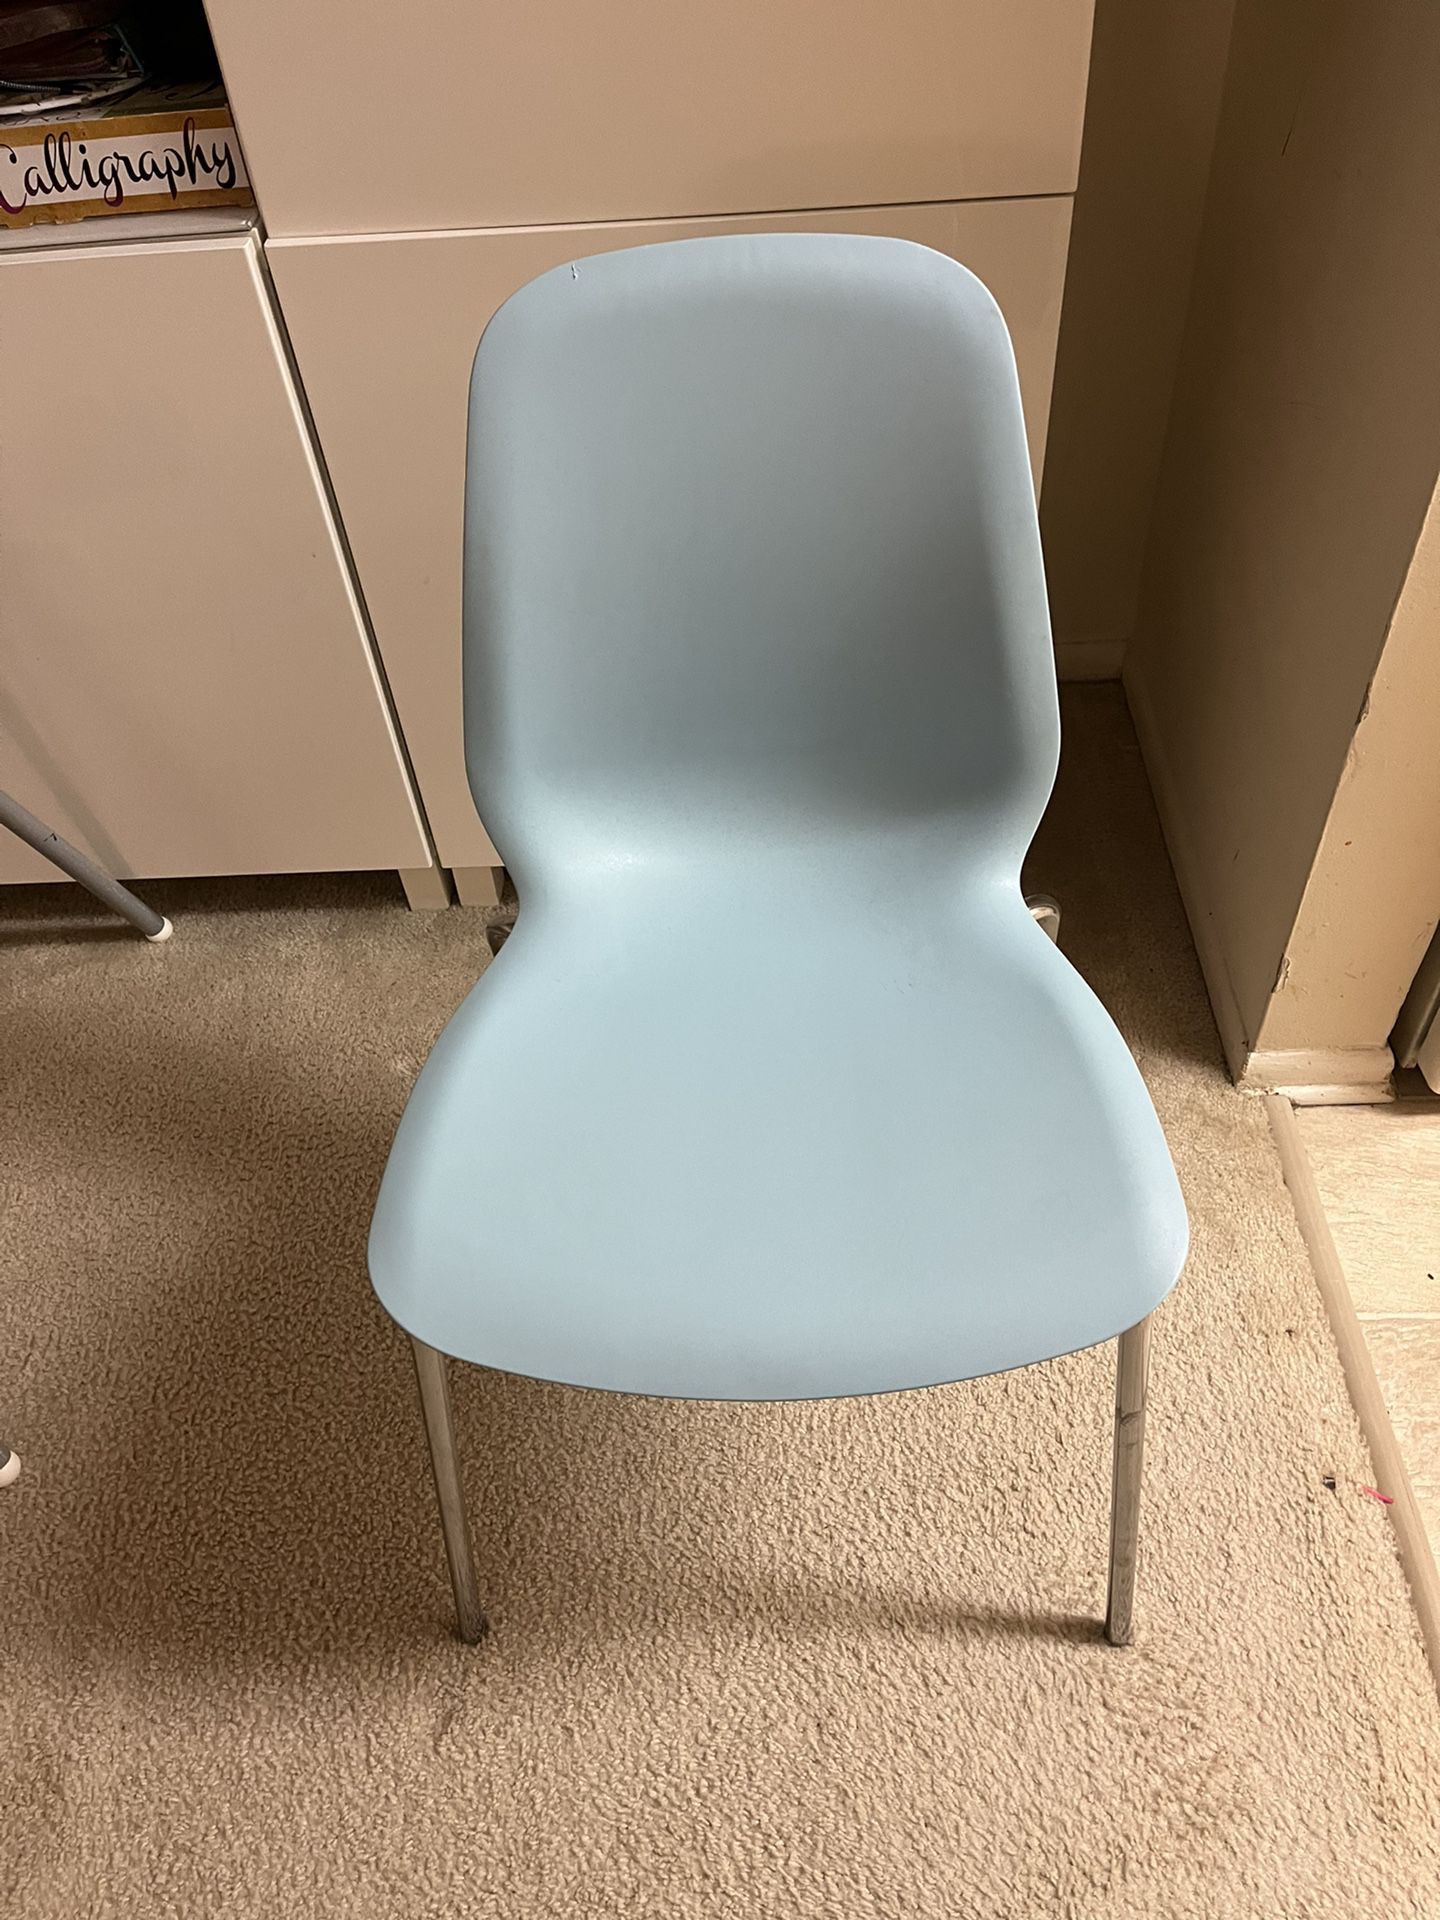 IKEA Office Chairs 